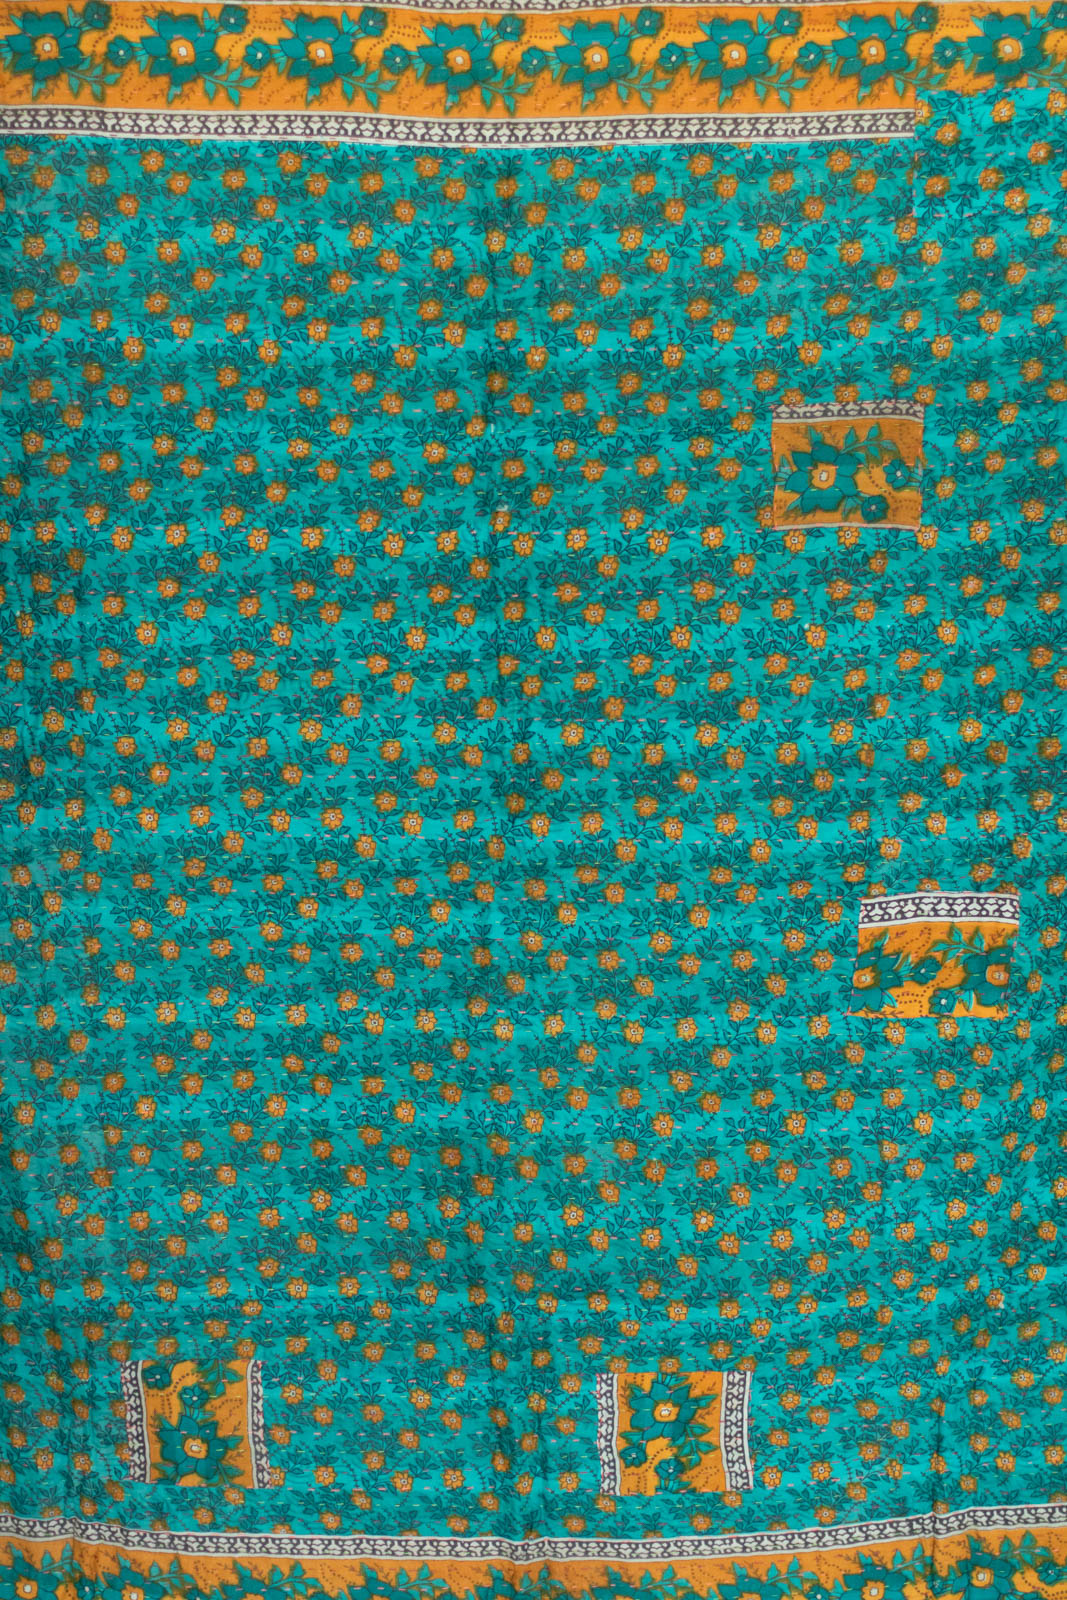 Special No. 7 Kantha Mini Blanket